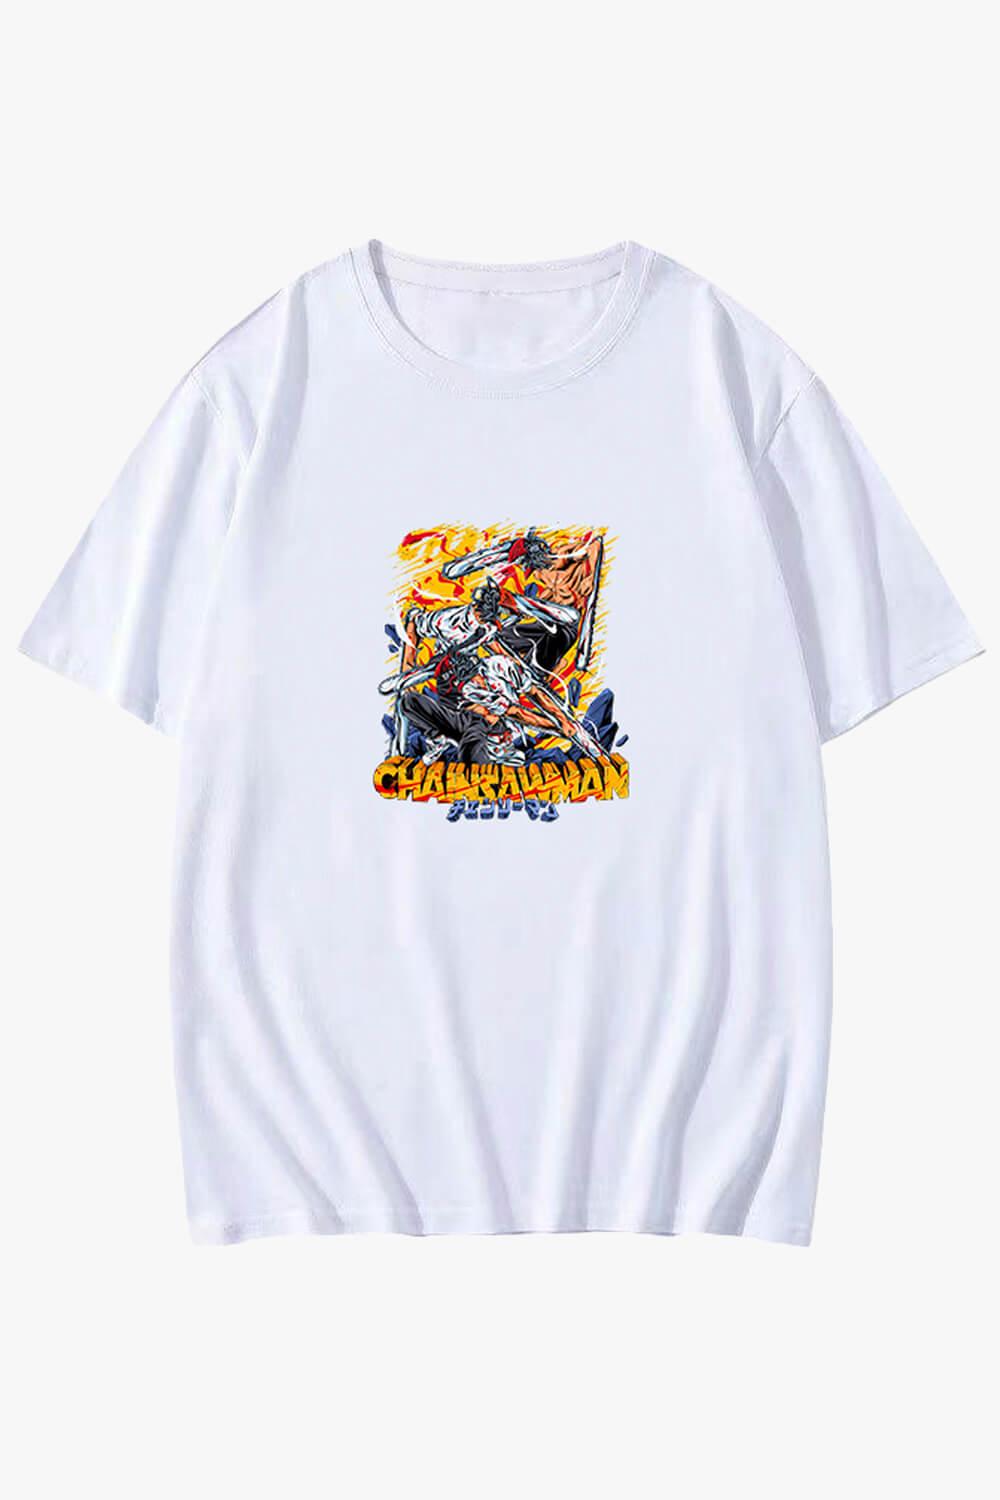 Chainsaw Man Retro Devil Denji T-Shirt - Aesthetic Clothes Shop